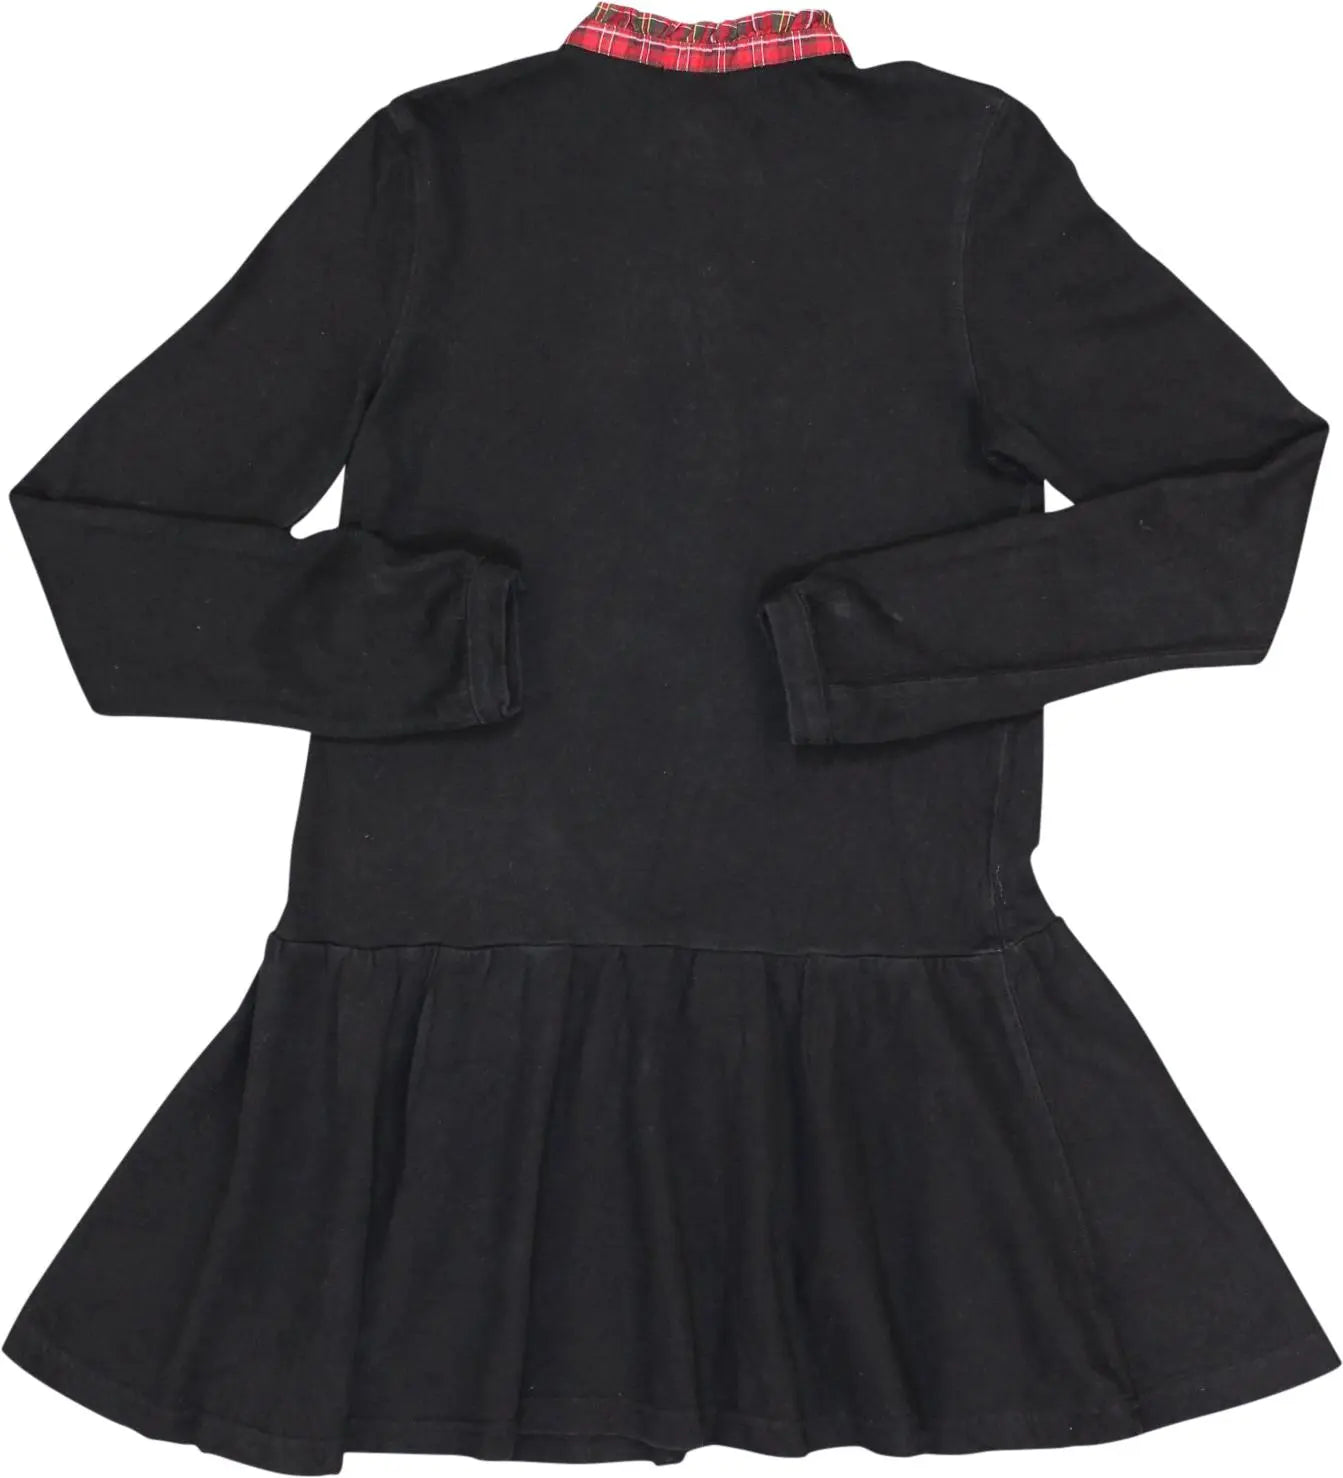 Ralph Lauren - Black Dress by Ralph Lauren- ThriftTale.com - Vintage and second handclothing